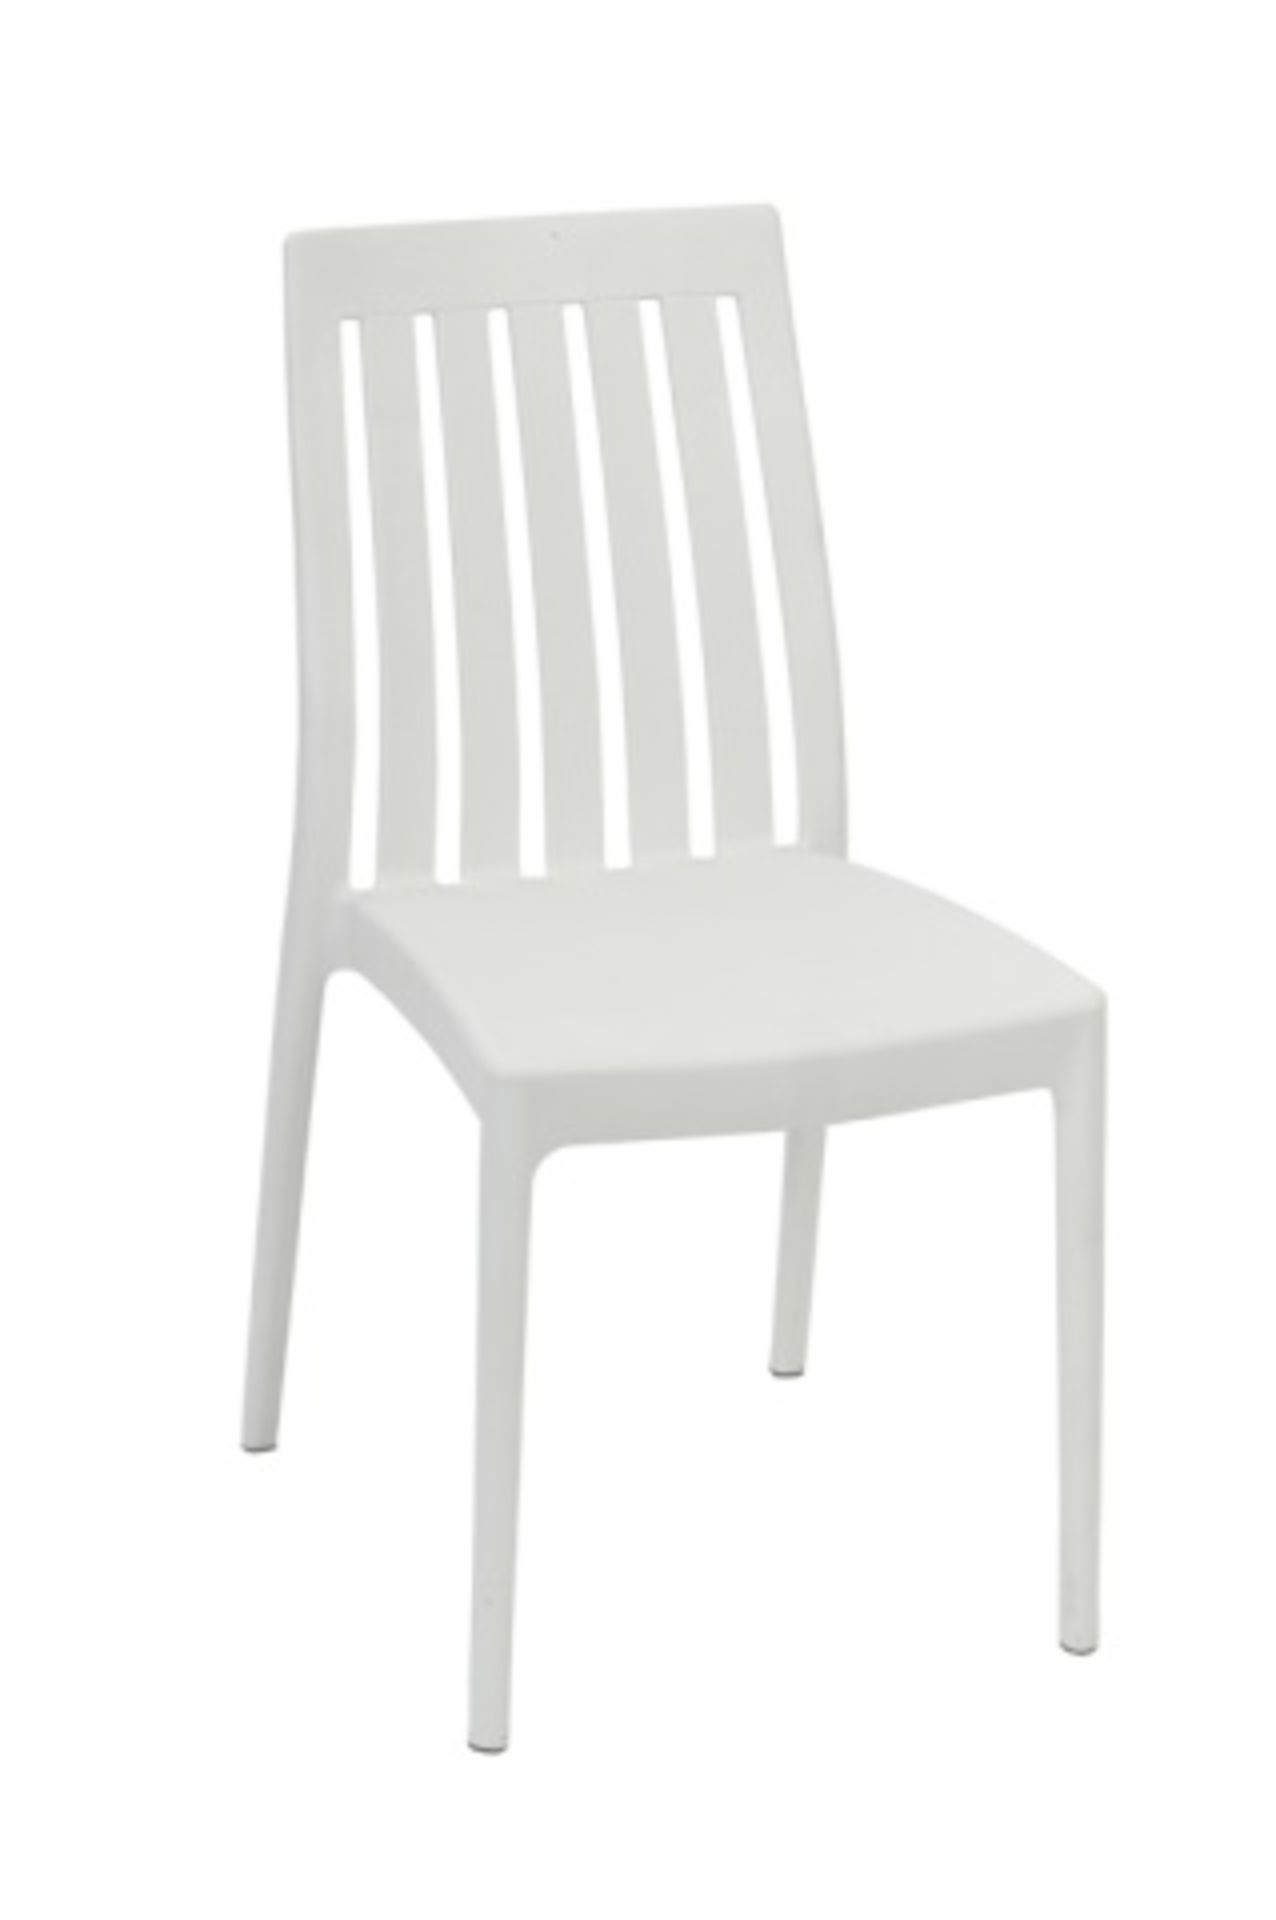 Soho side chair. One piece fiberglass reinforced polypropylene. 22 boxes of 4 each, 88 total.